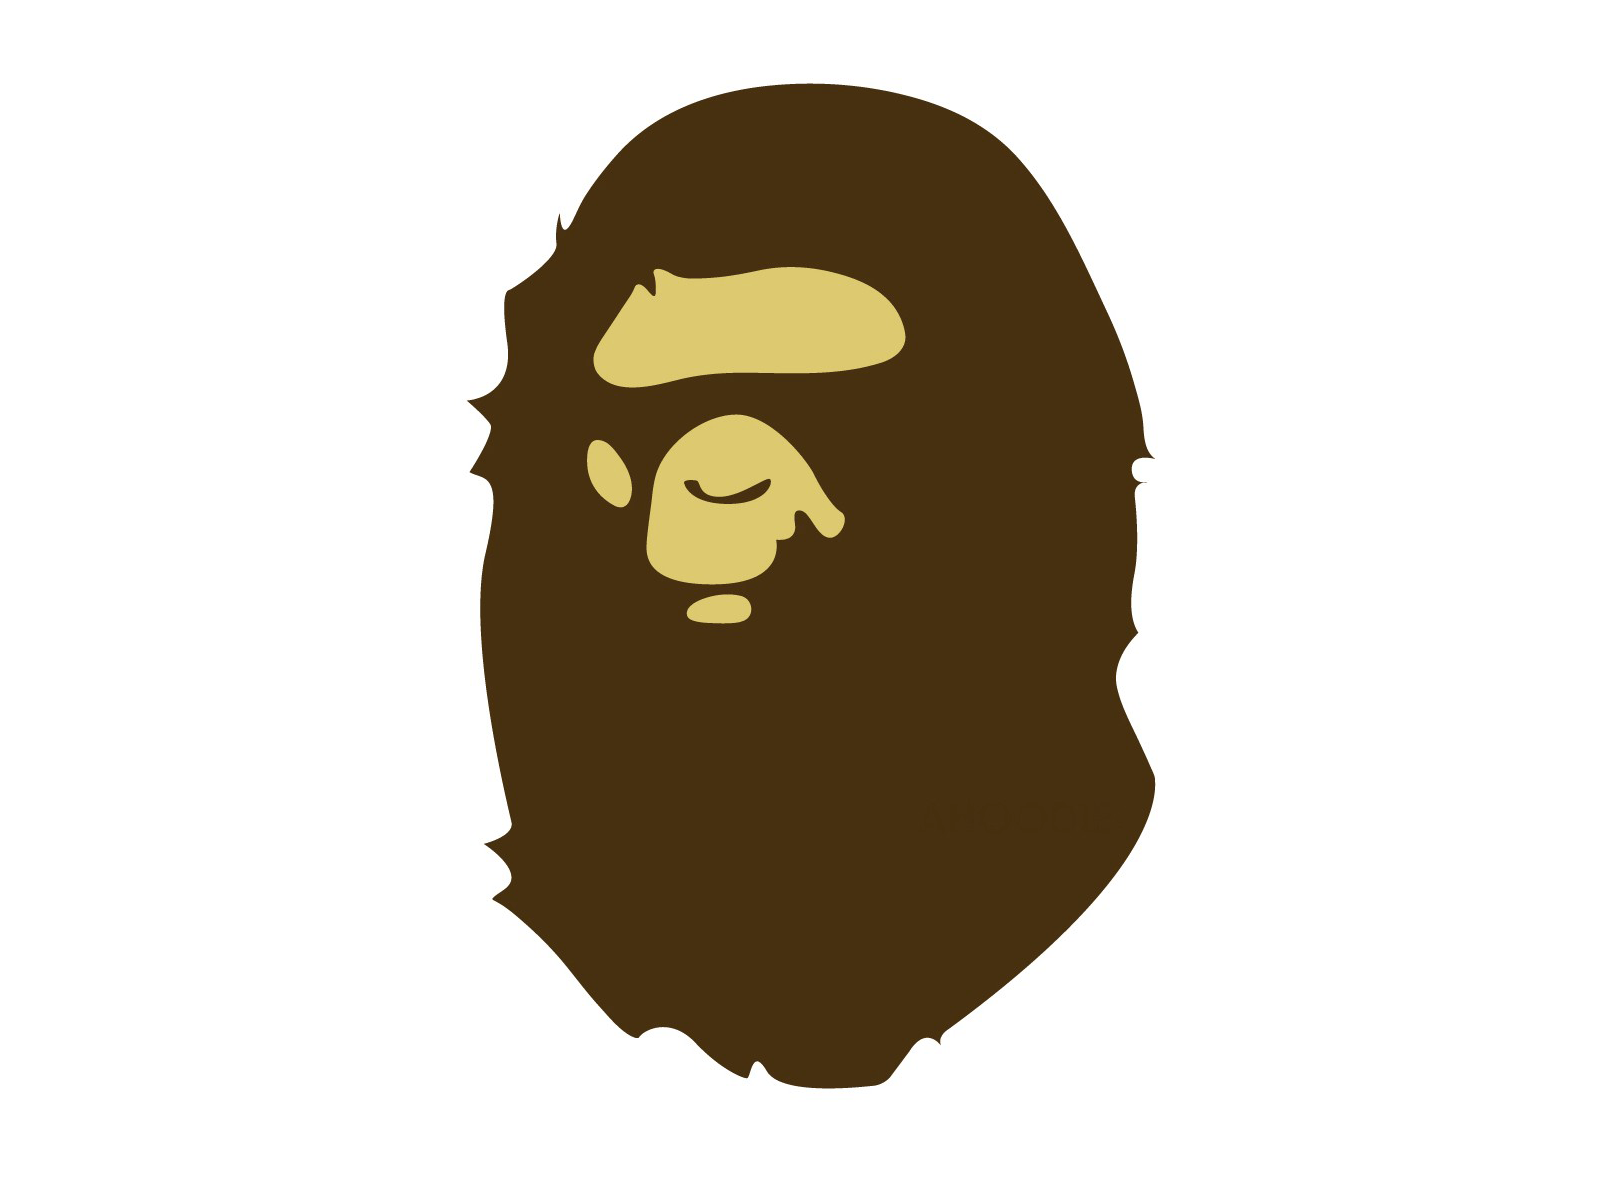 BAPE Gorilla Logo - Bape Clothing and Characters